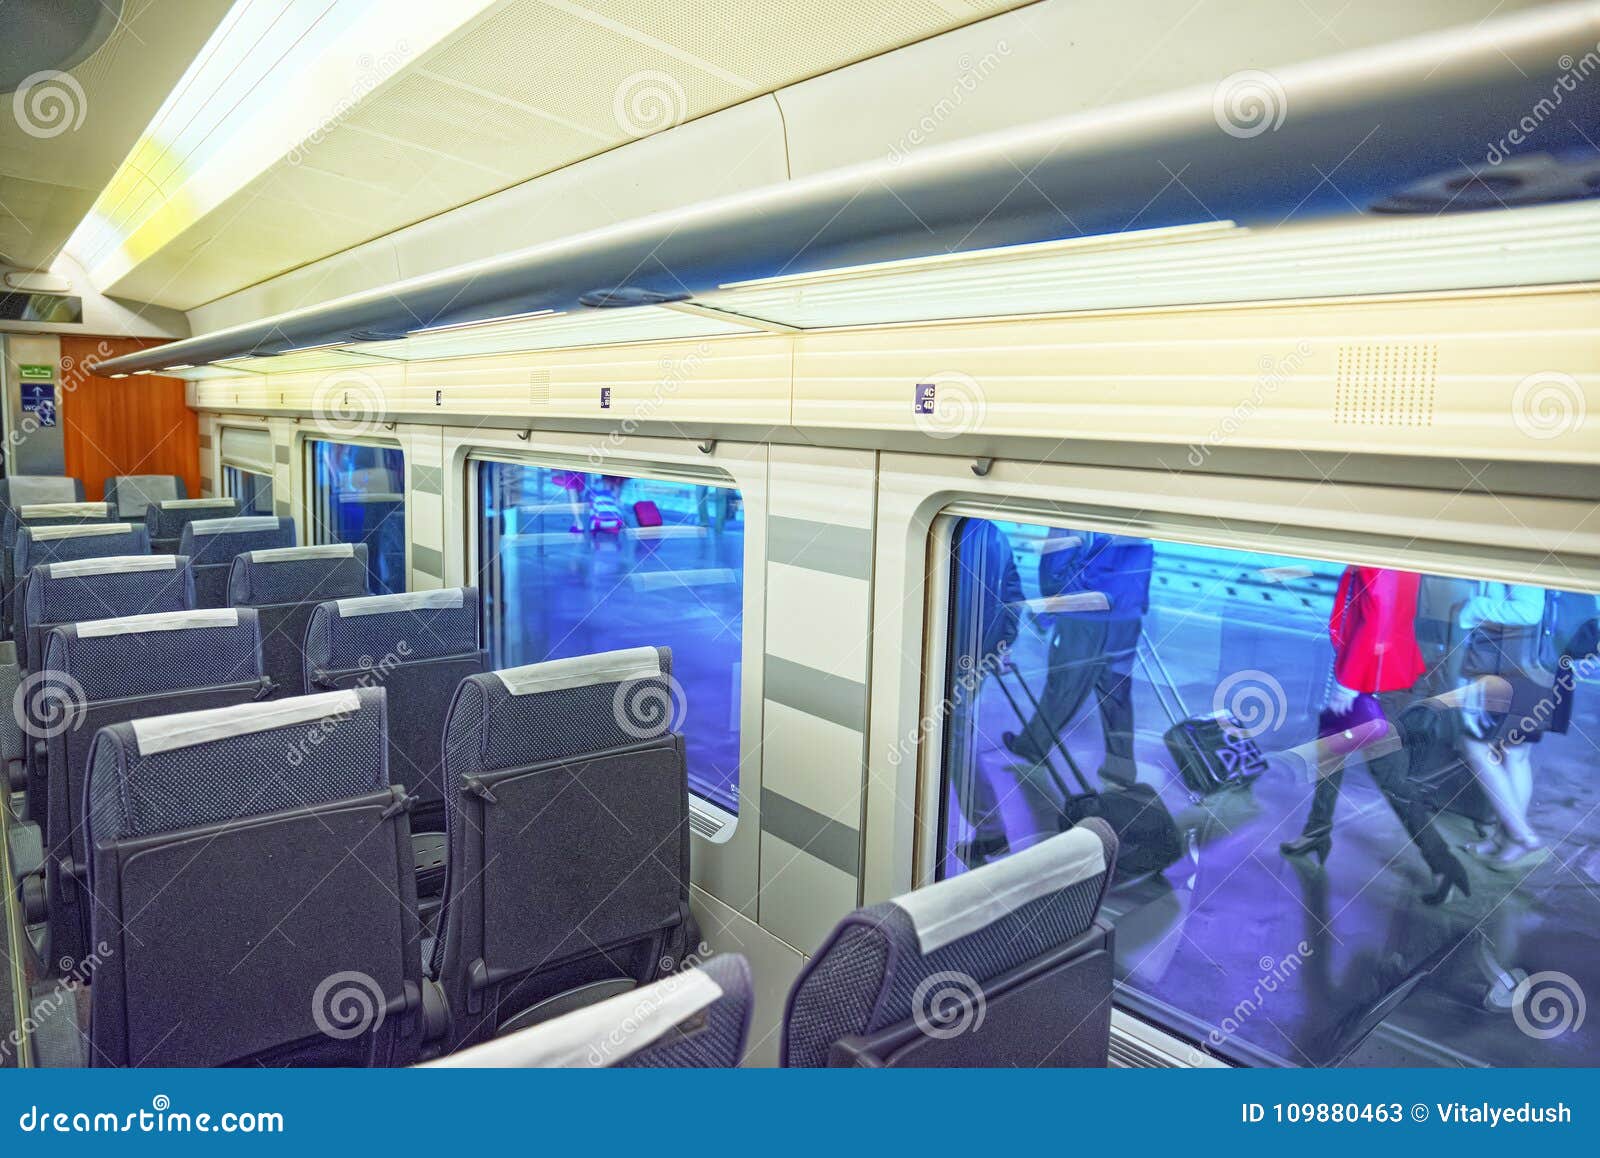 interior of modern hi-speed passenger train of spanish railways